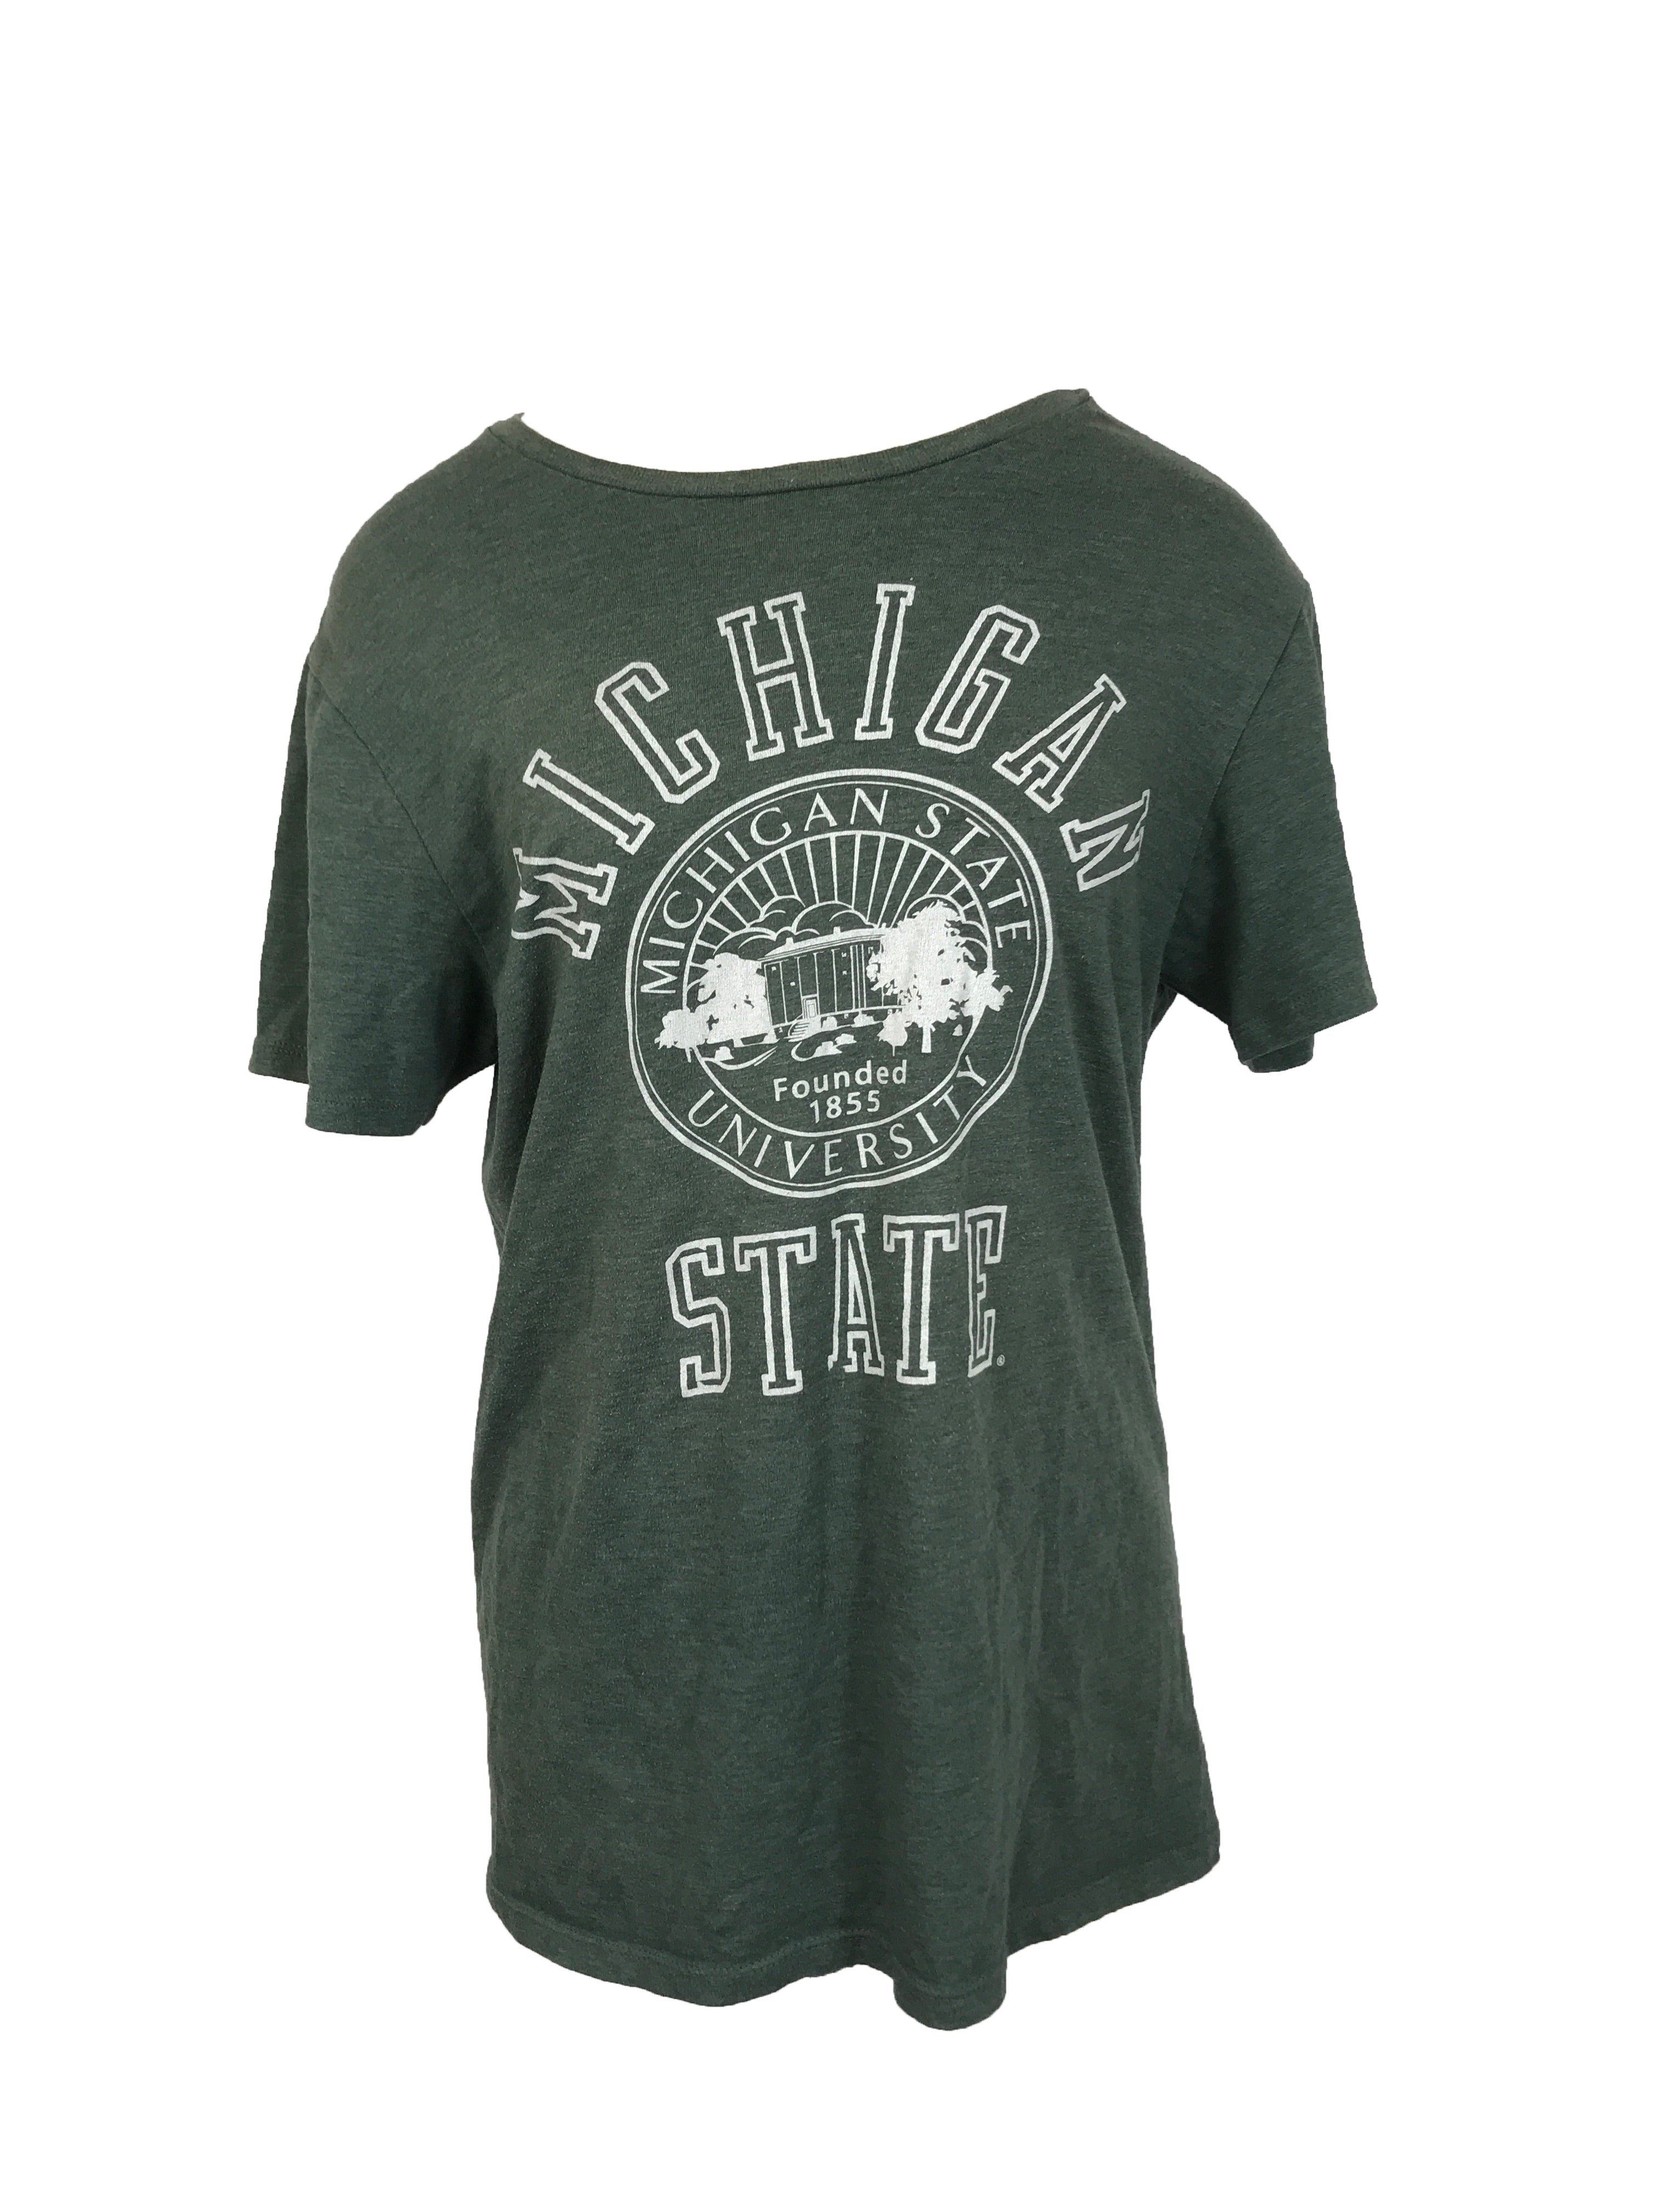 Green Michigan State T-Shirt Women's Size M